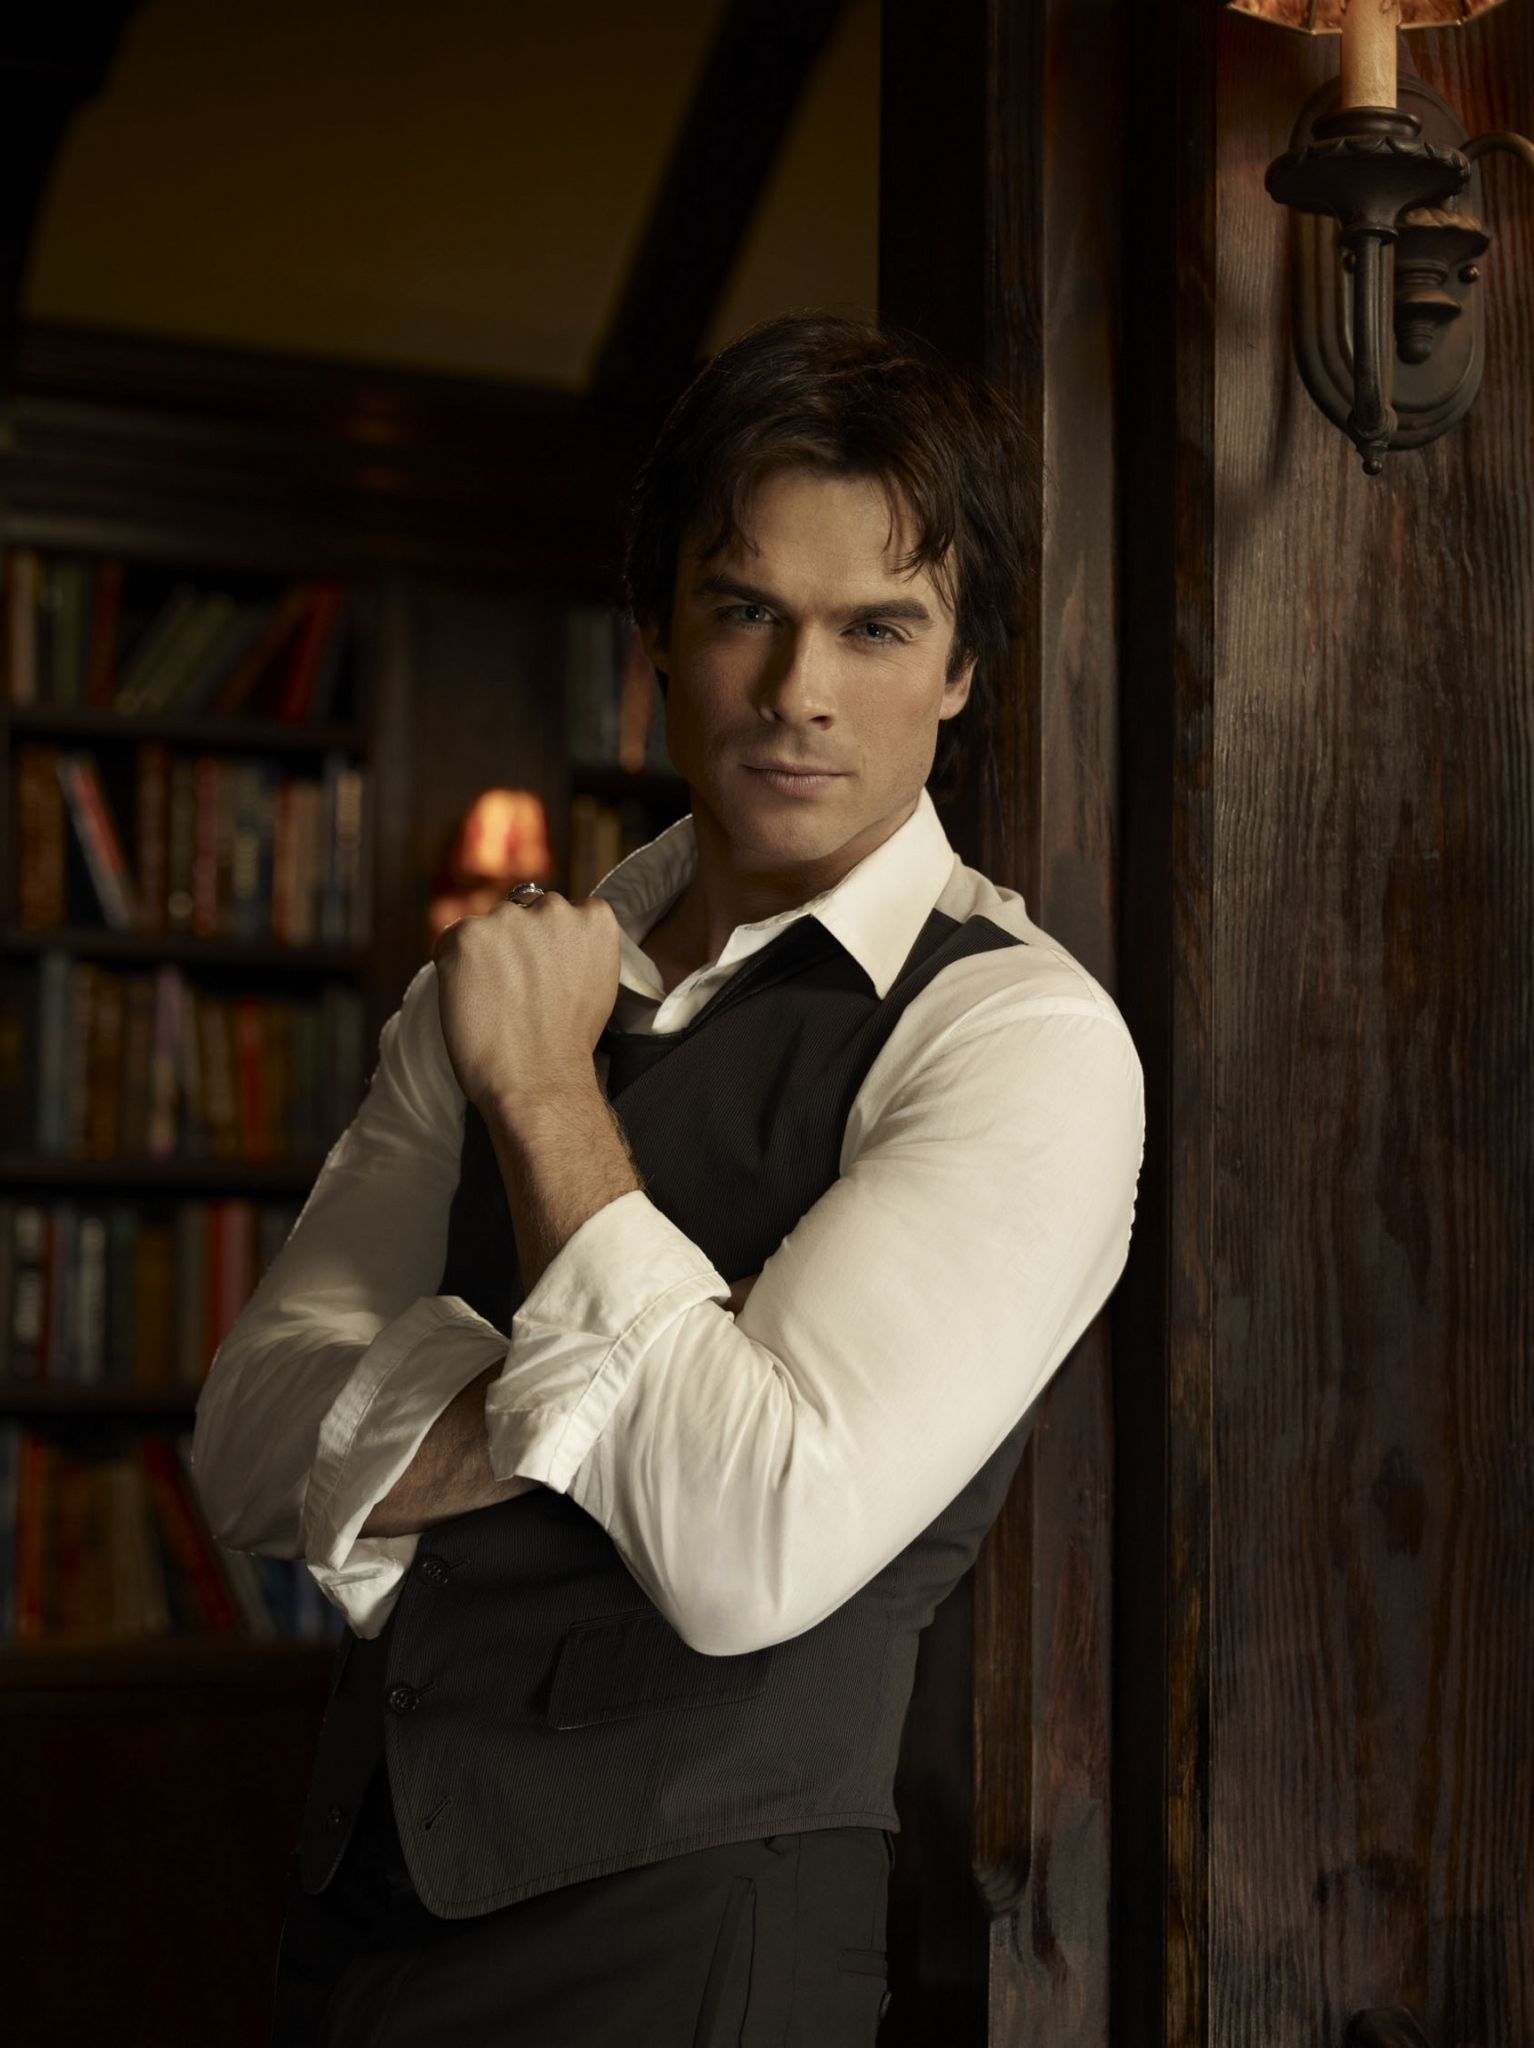 The Vampire Diaries Season Promo Photo Of Damon Played By Ian